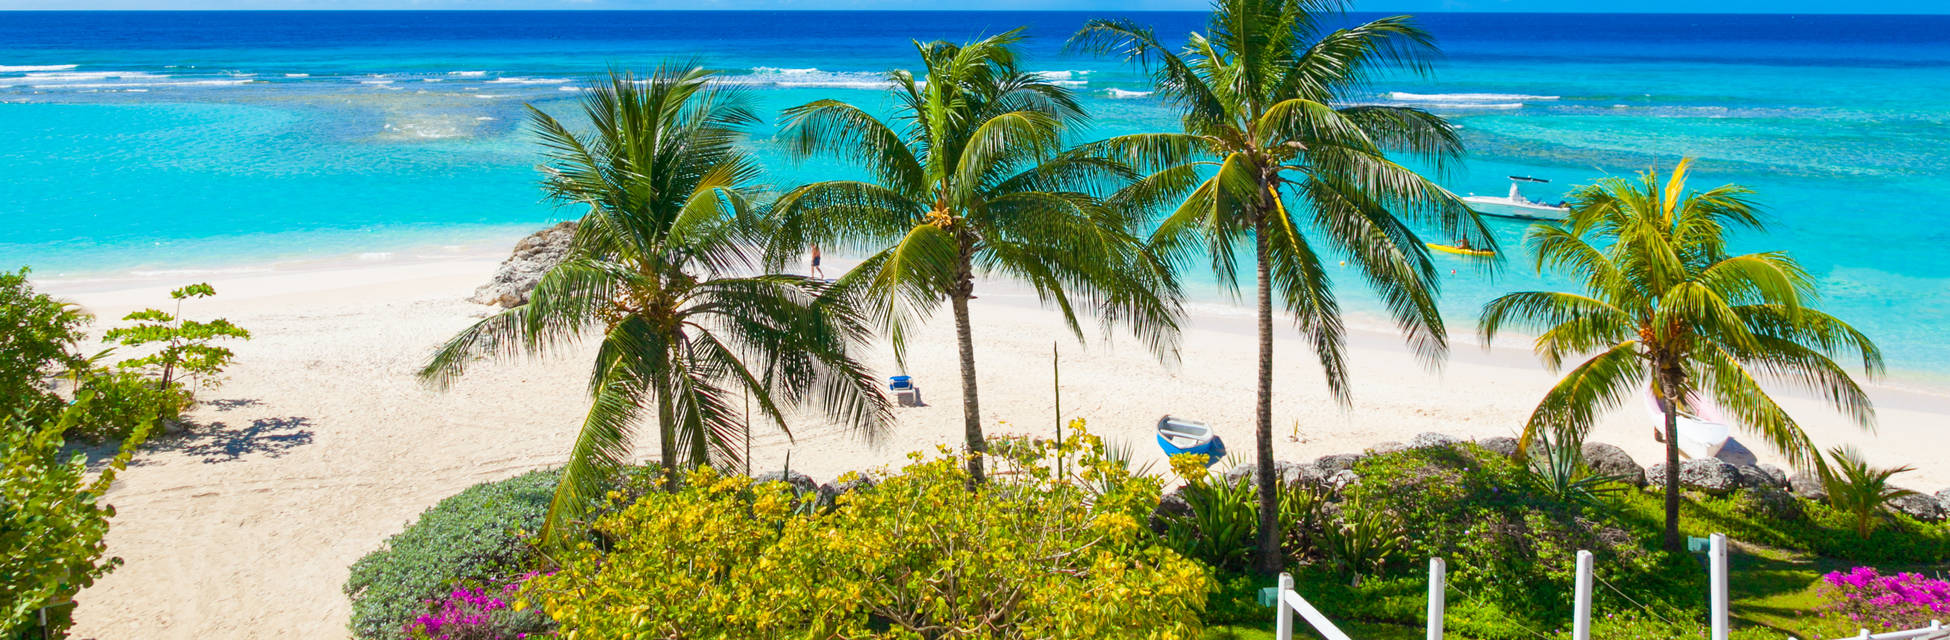 Barbados-Worthing-Beach-AdobeStock_359800450.jpg